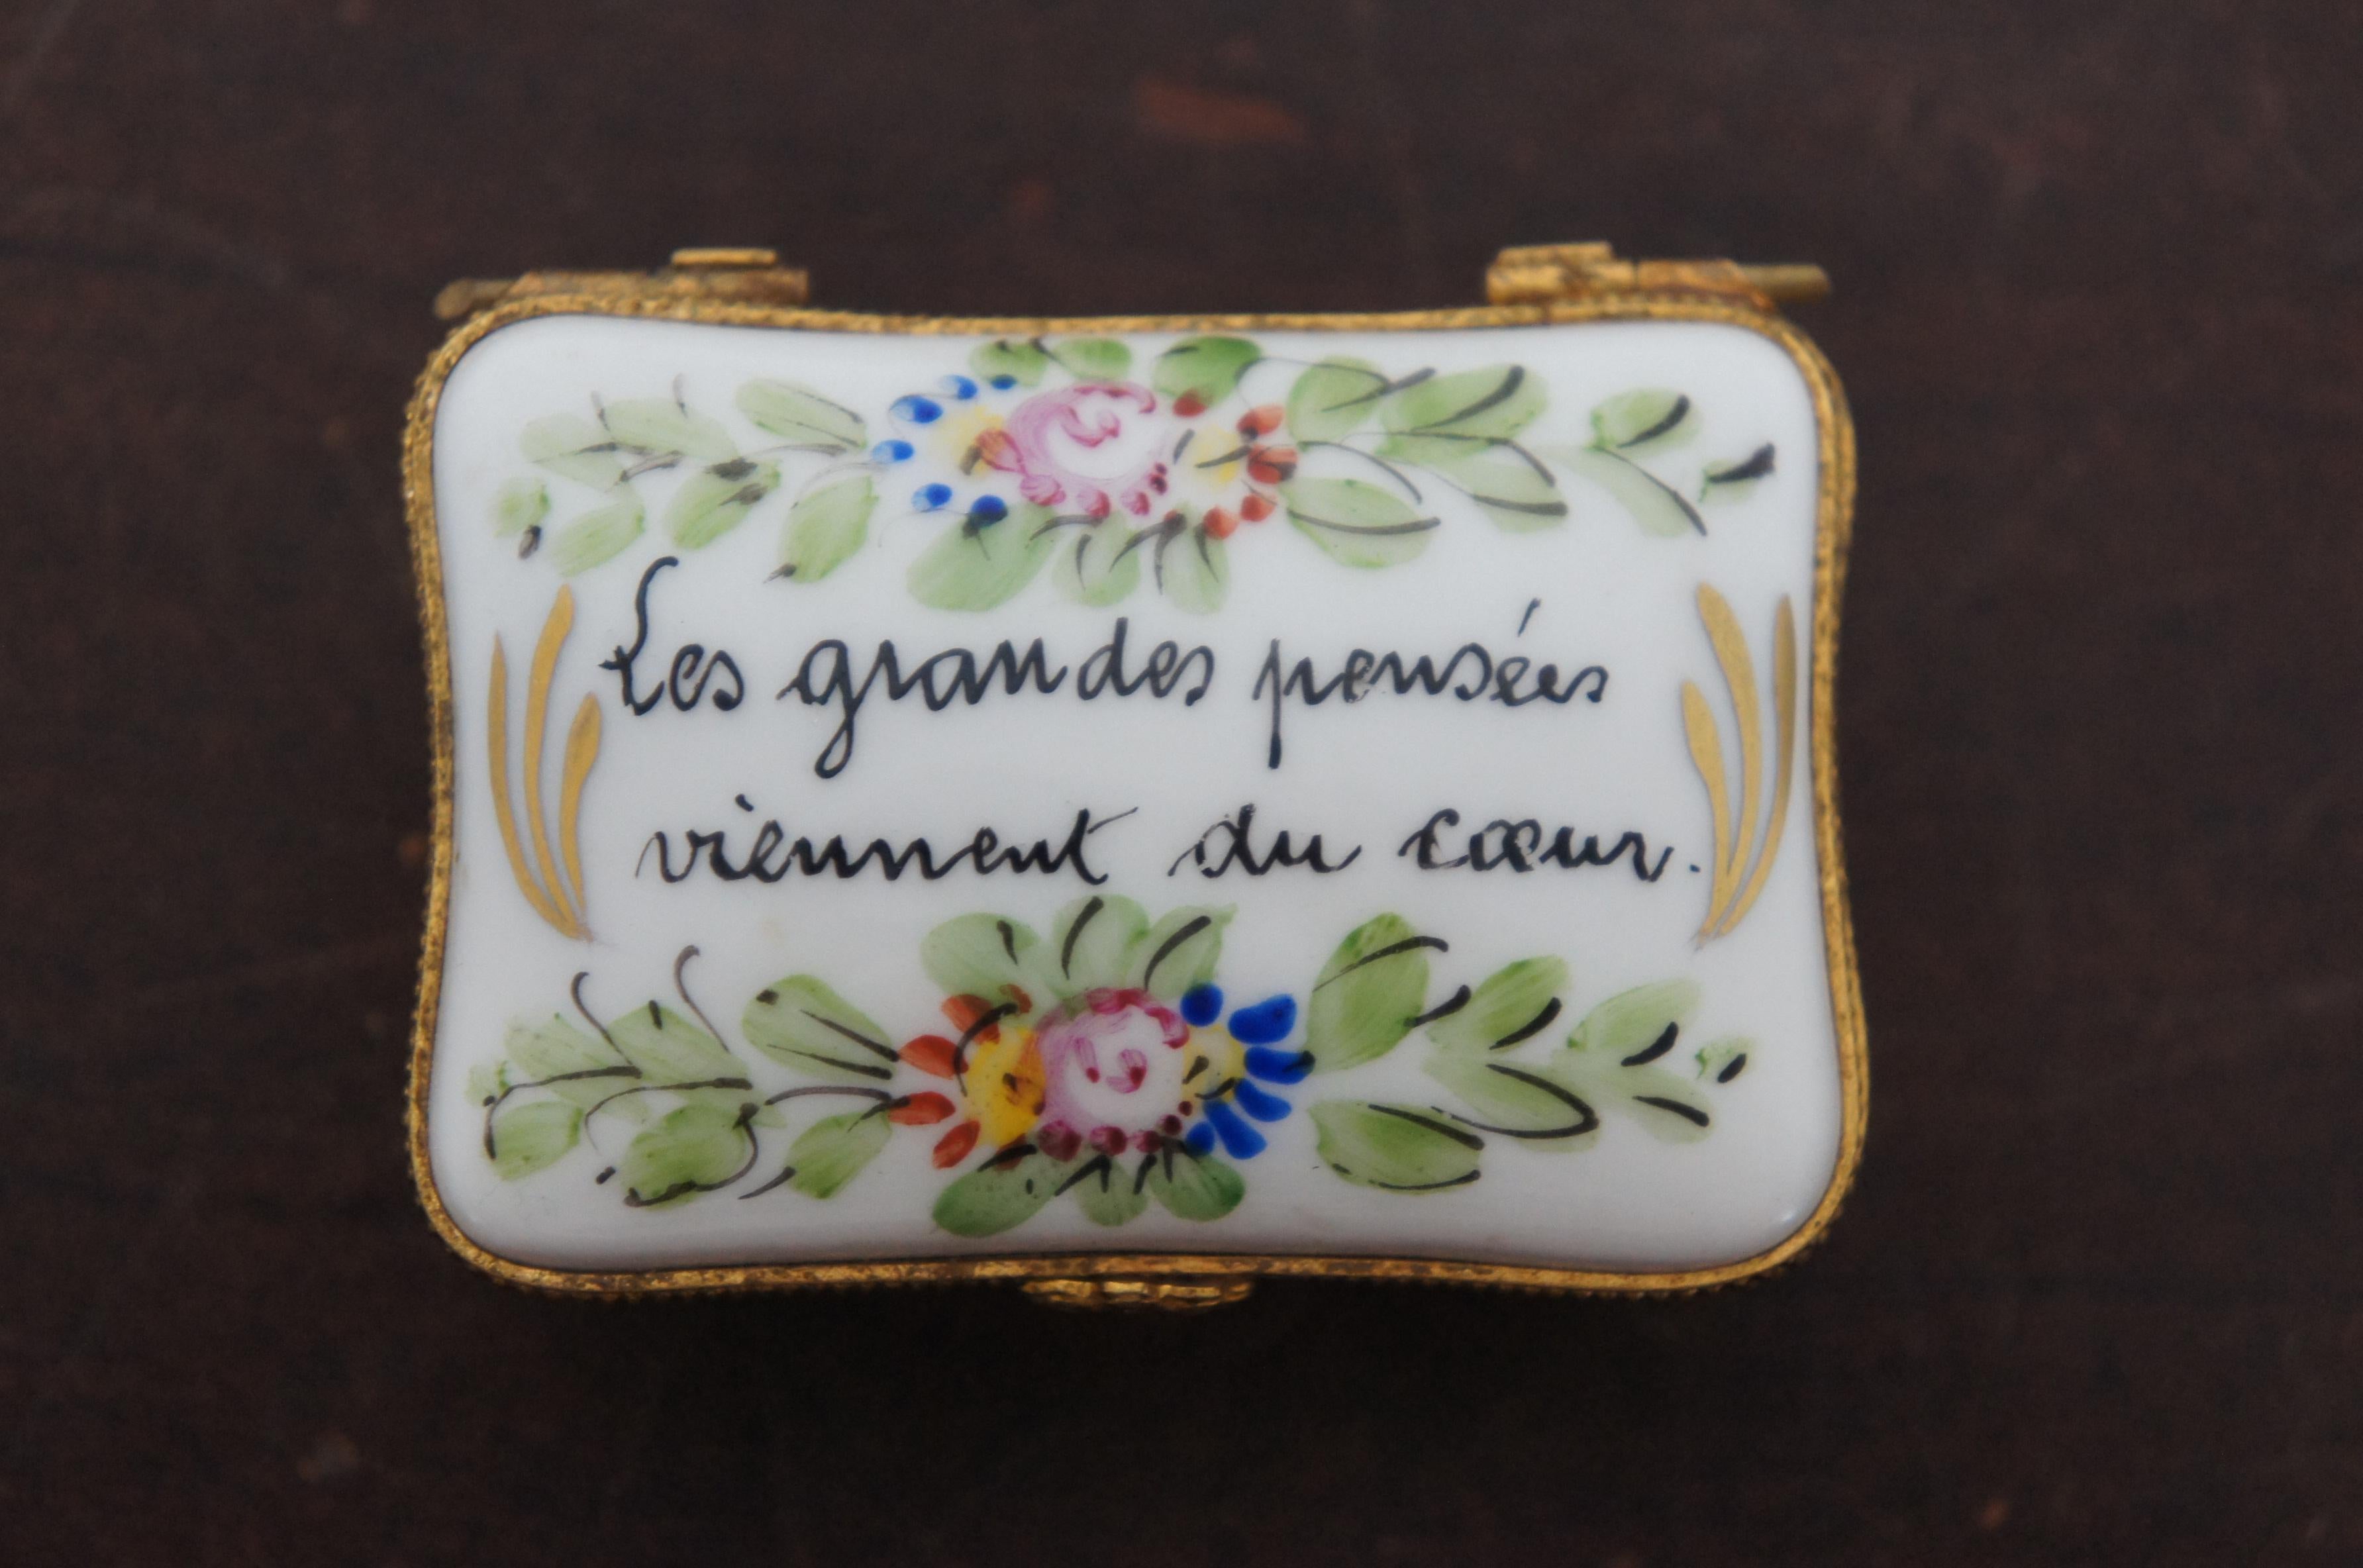 French Porcelain Limoges Trinket Keepsake Box Viennent du Coeur 3